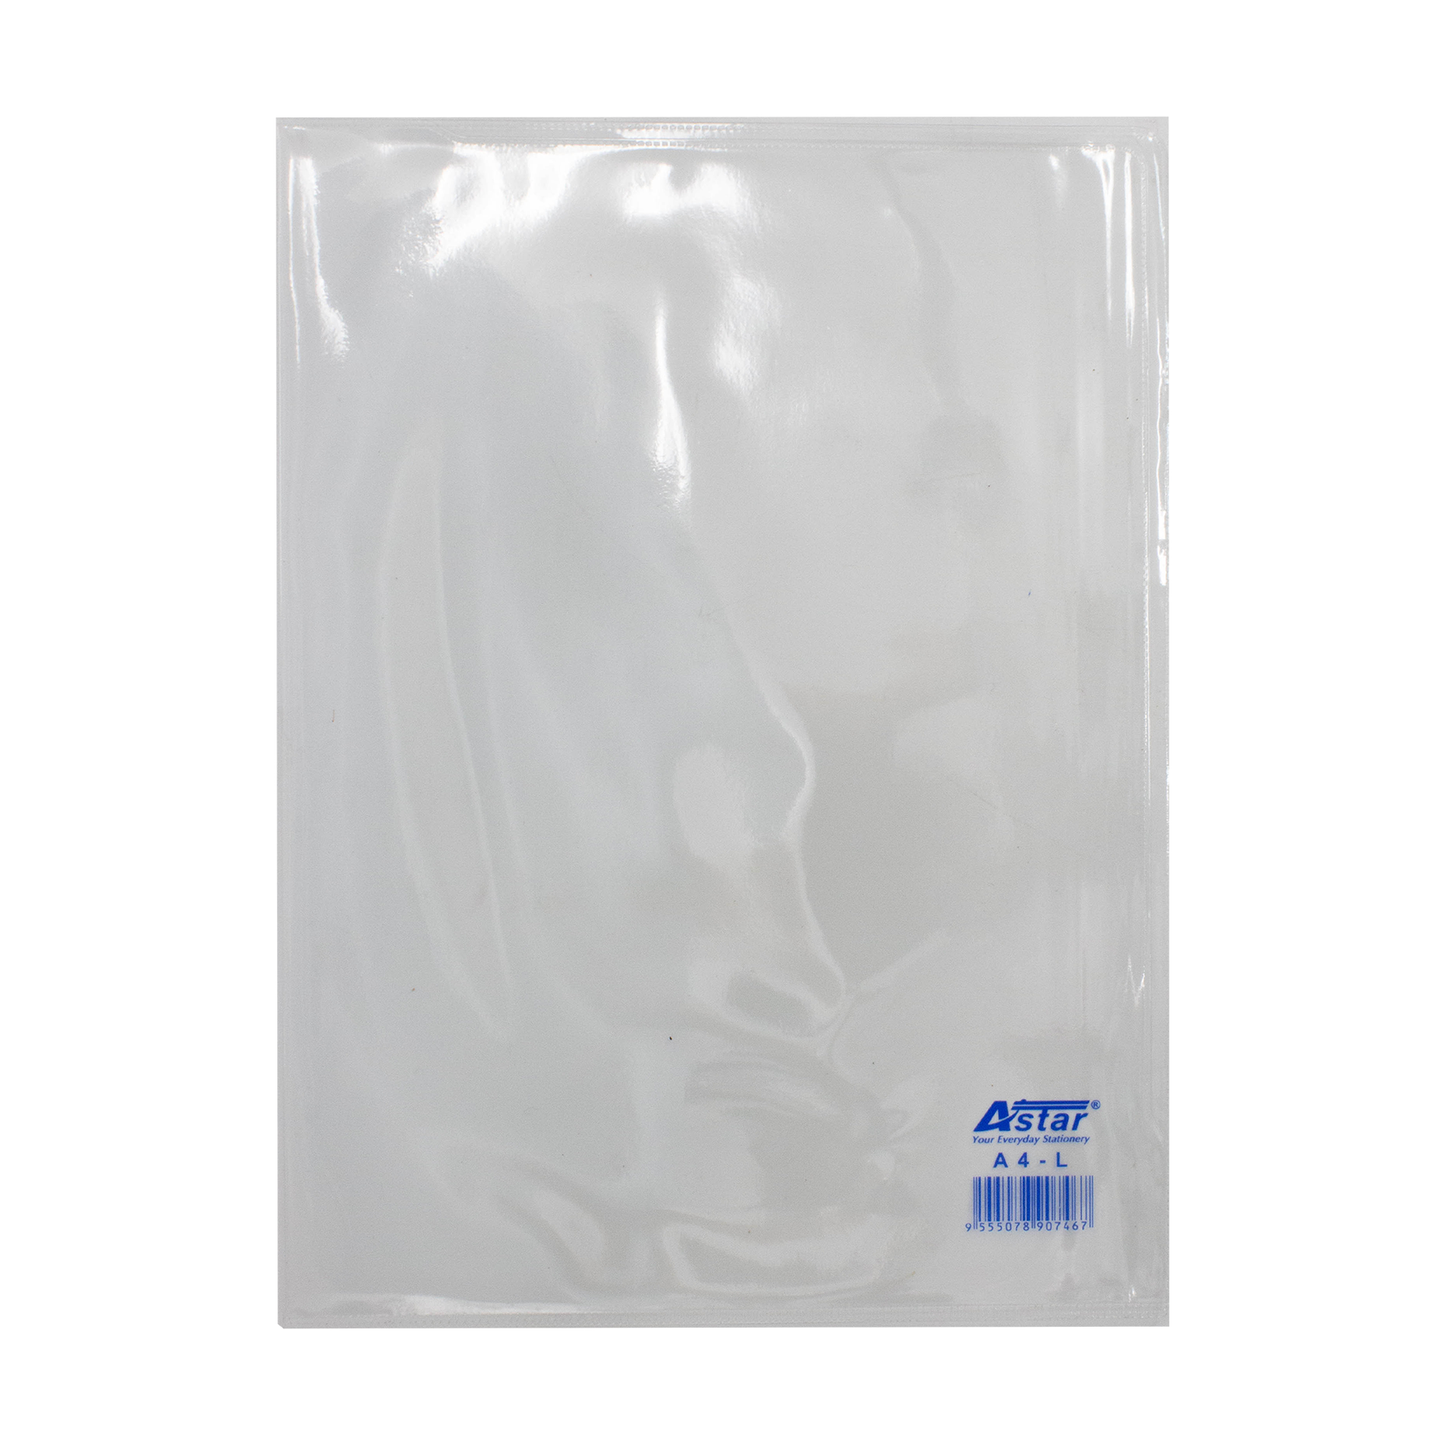 A4-L - ASTAR PVC SHEET FOLDER FILE